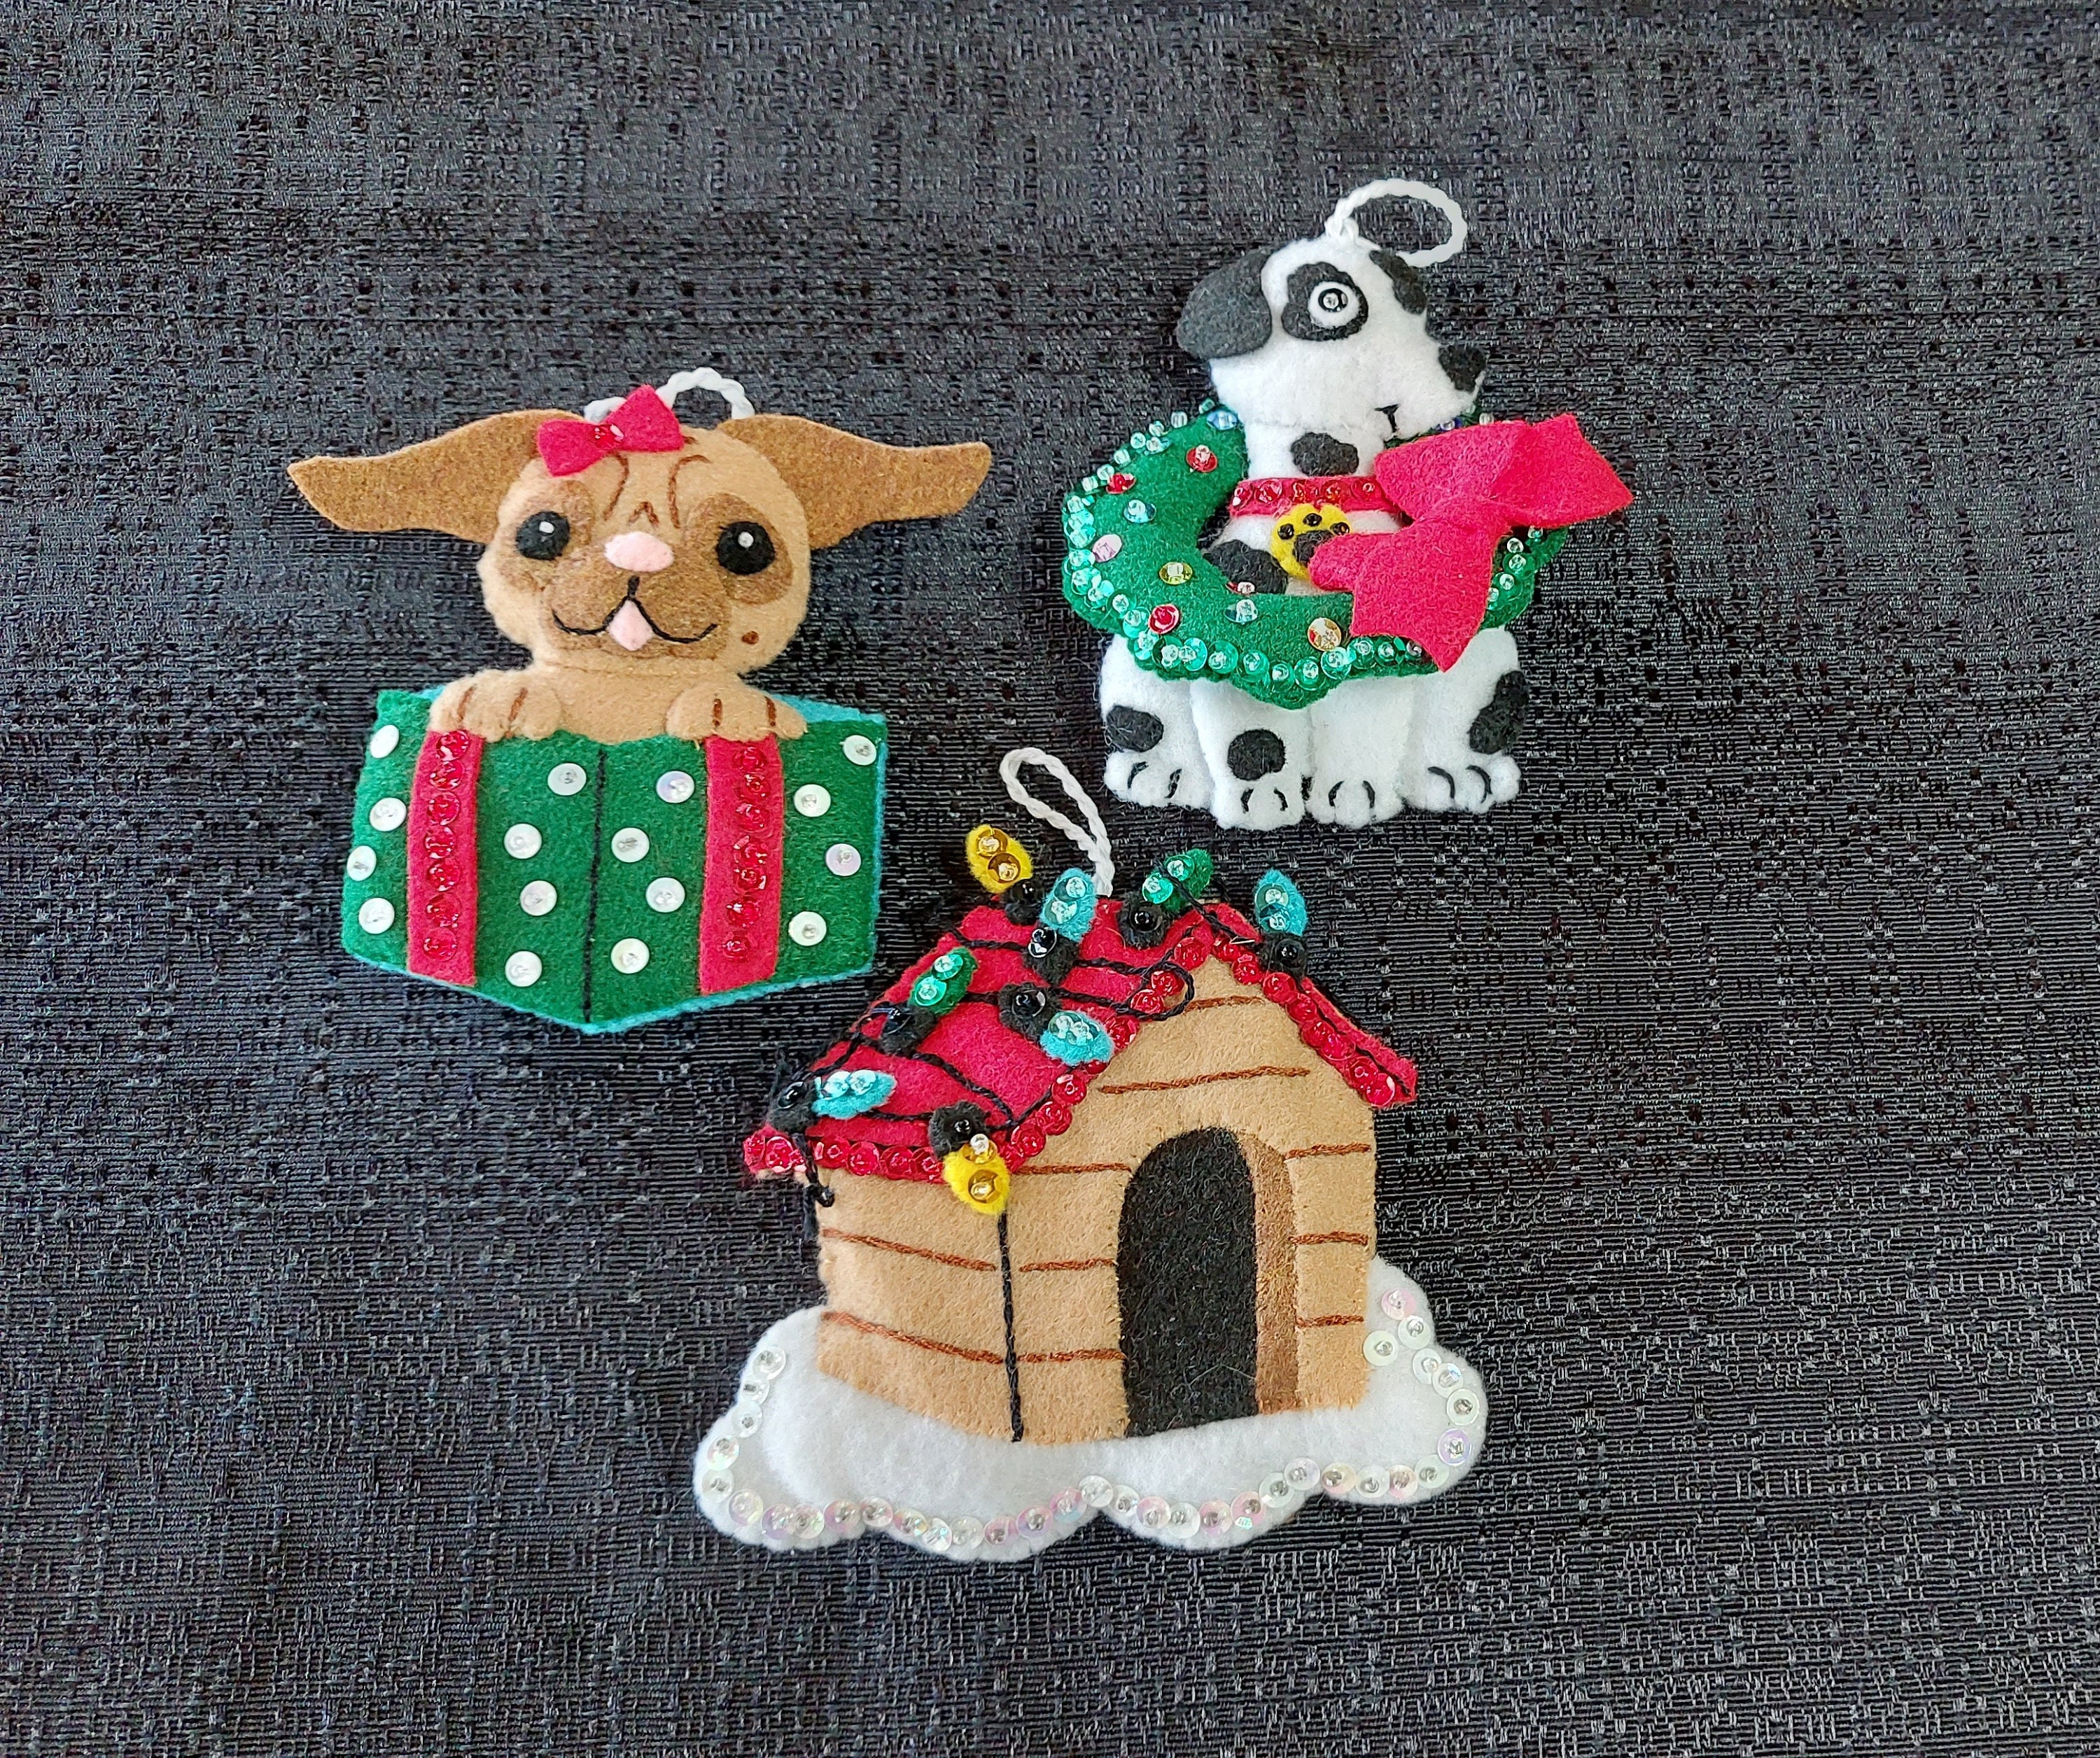 Santa's Sweet Shop ~ Bucilla 6 Piece Felt Ornament Kit #86187, Gingerbread  Man DIY